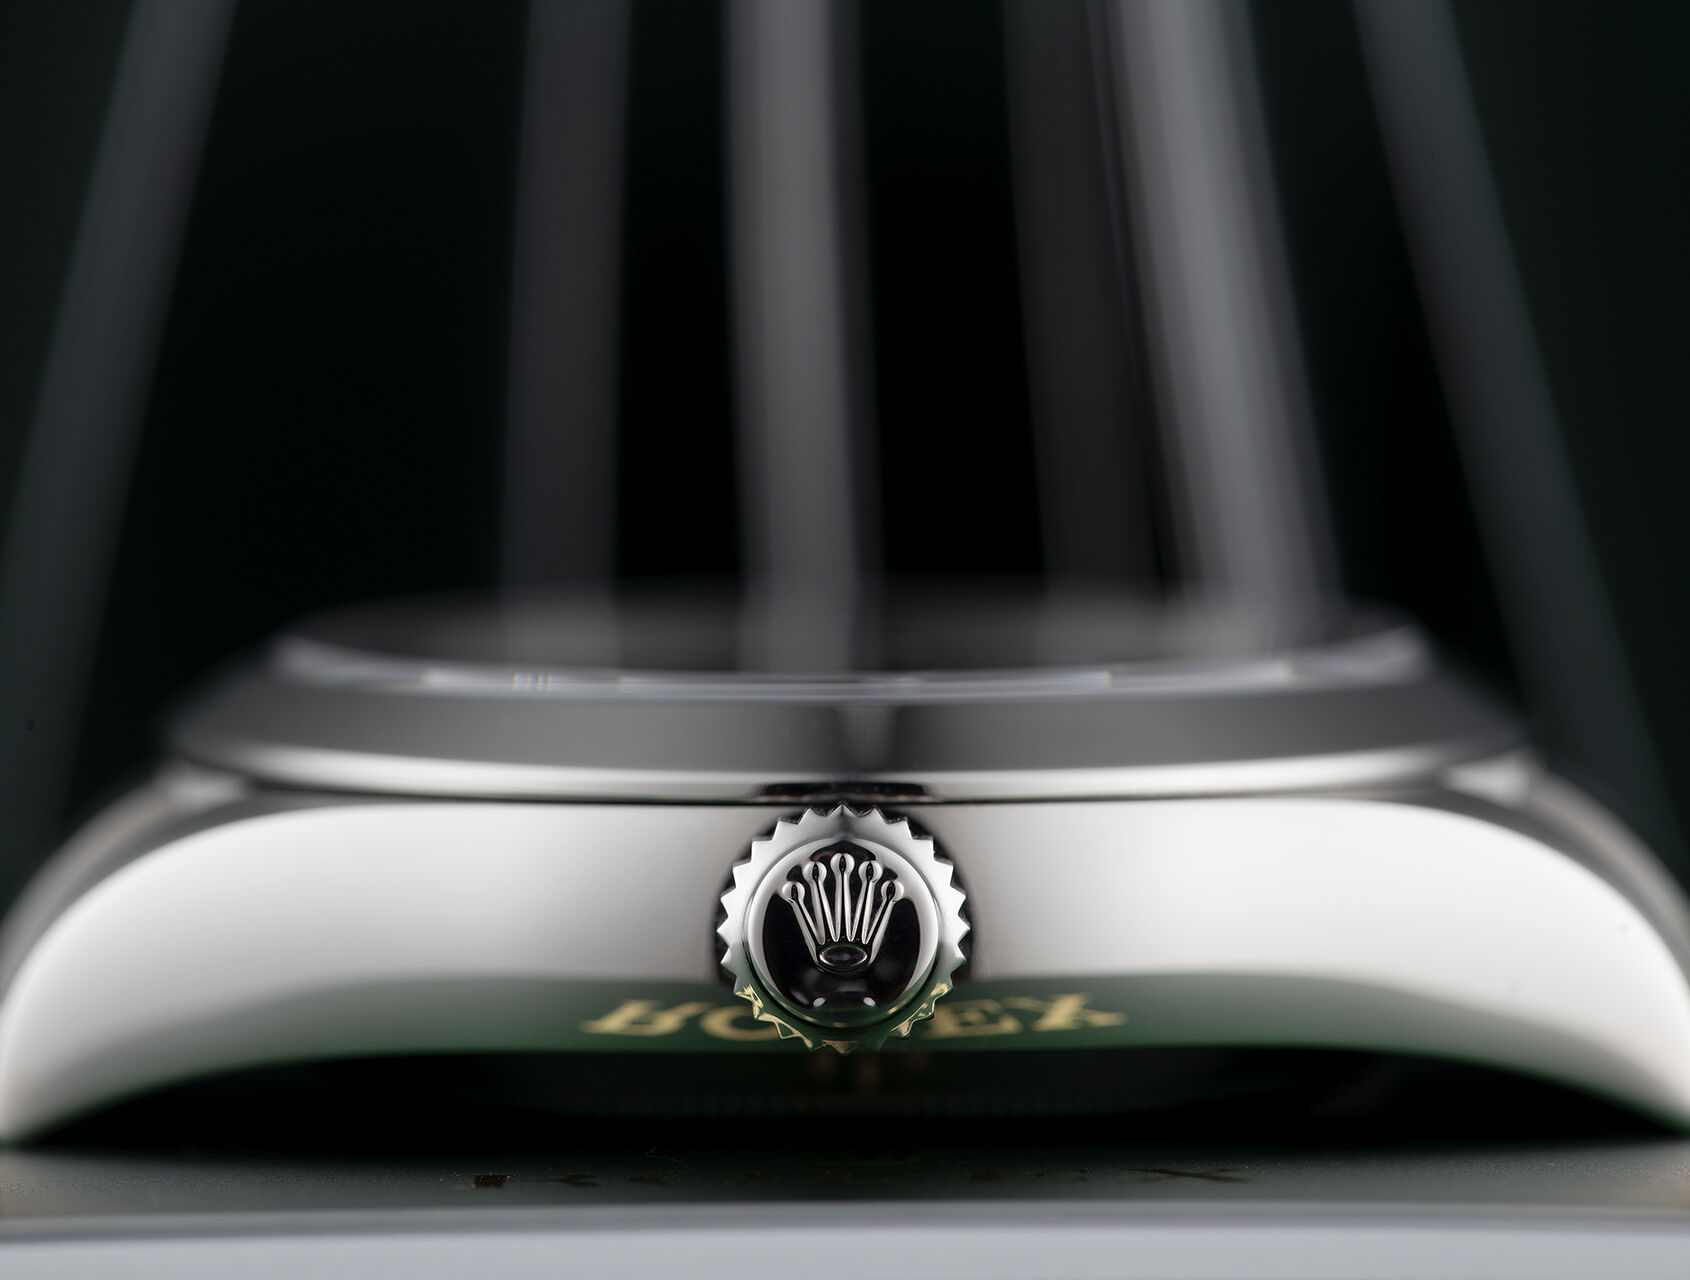 ref 116900 | 116400 - UK Retailed | Rolex Air-King